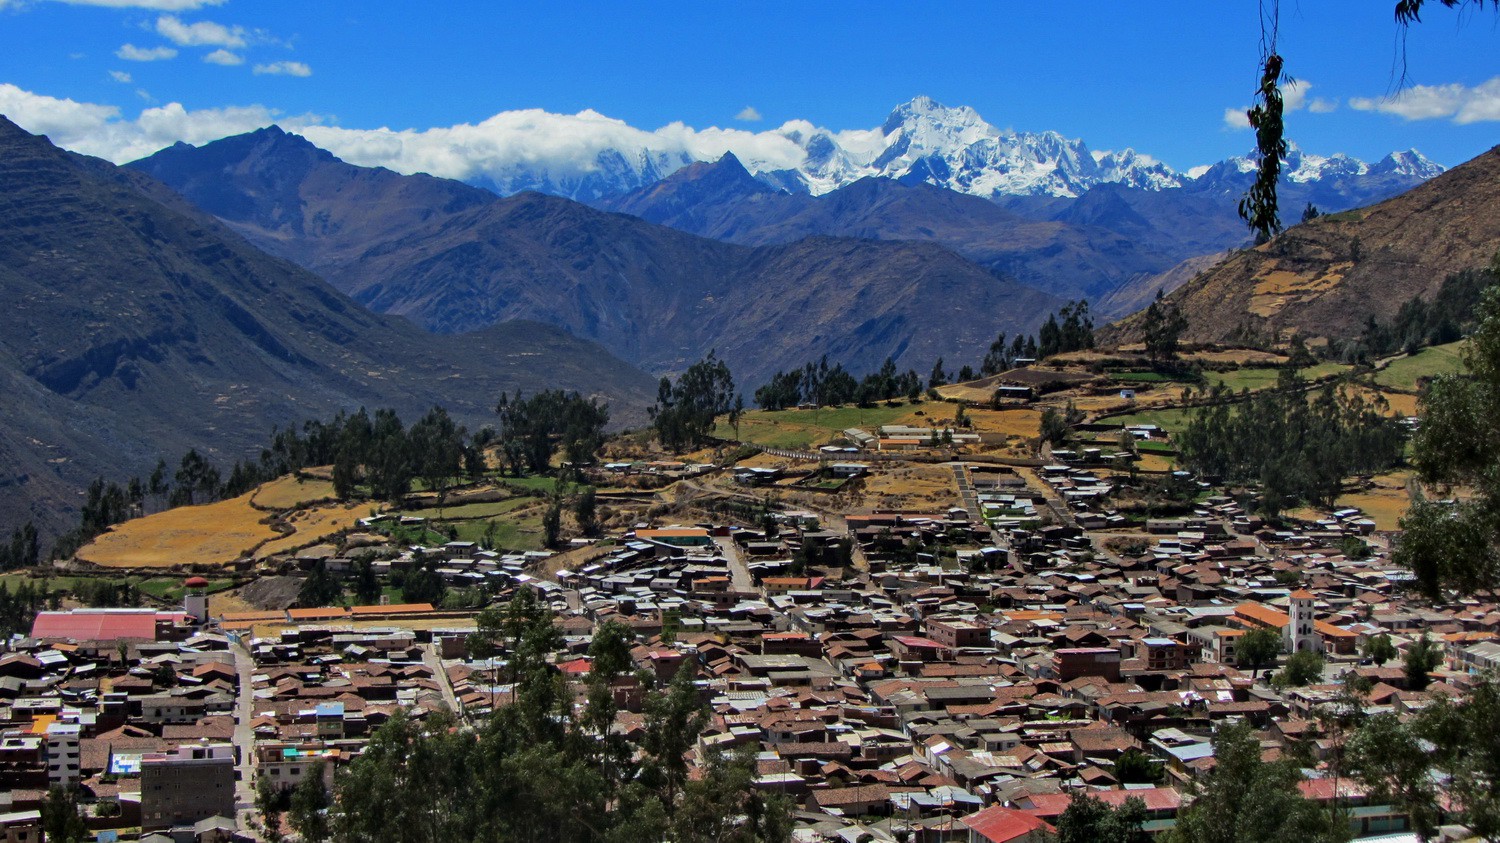 The village Chiquian with the Cordillera Huayhuash range